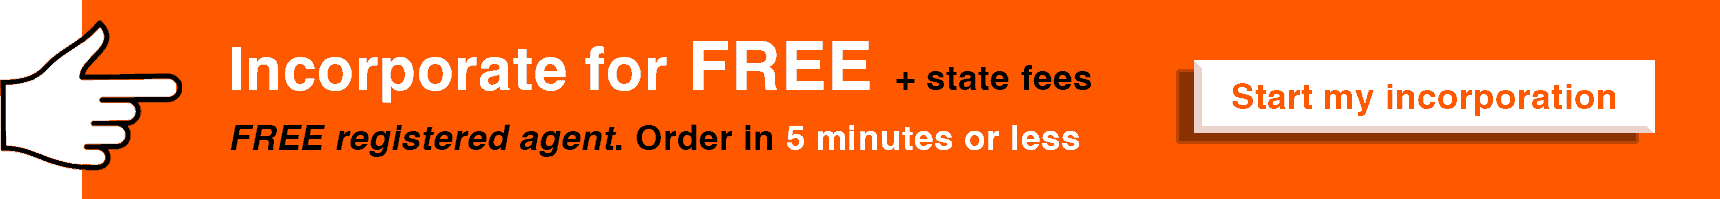 FREE + state fees